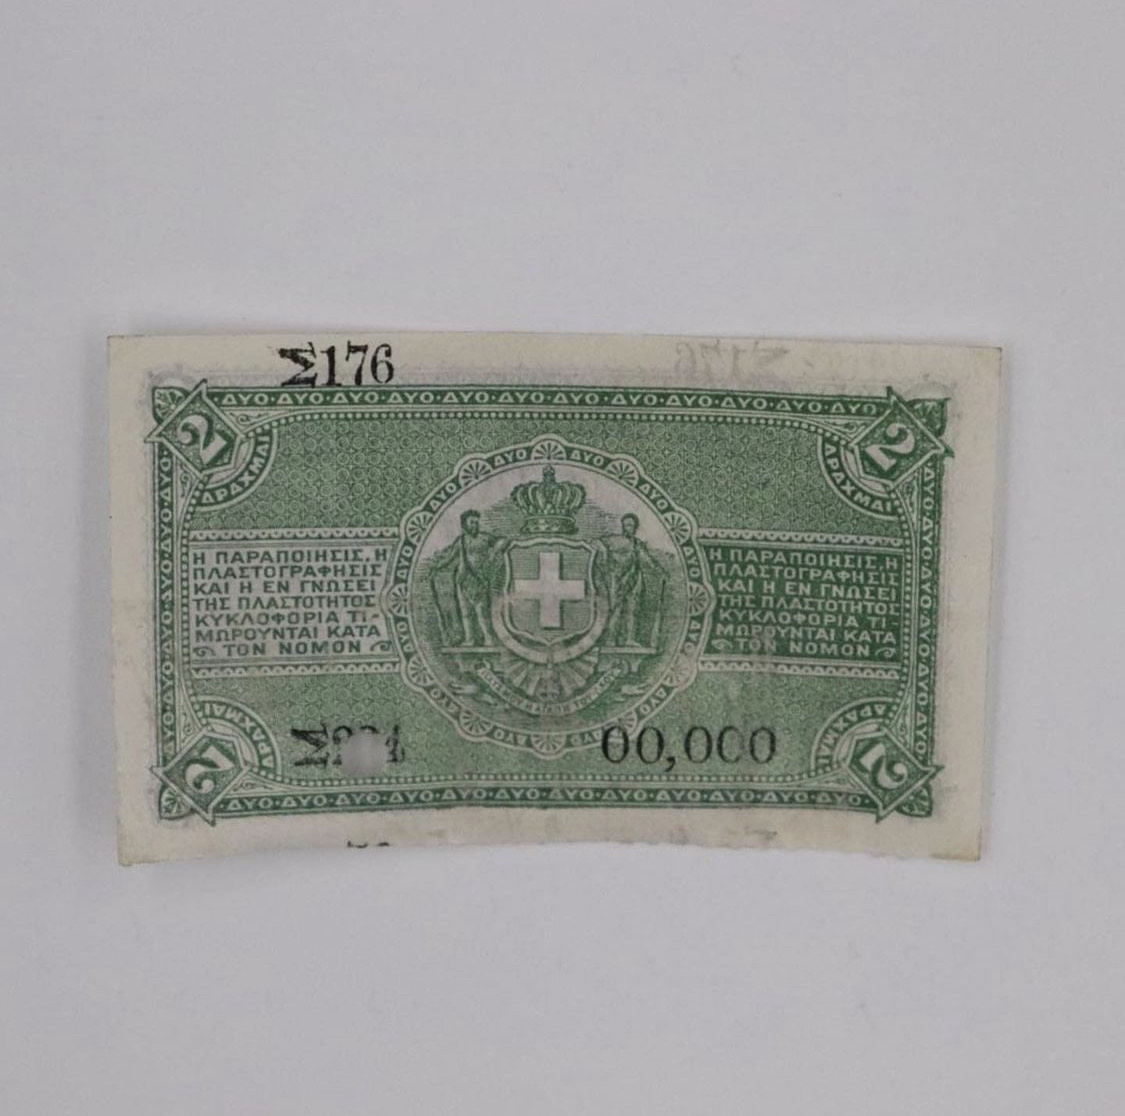 2 drachmas 1885 banknote specimen